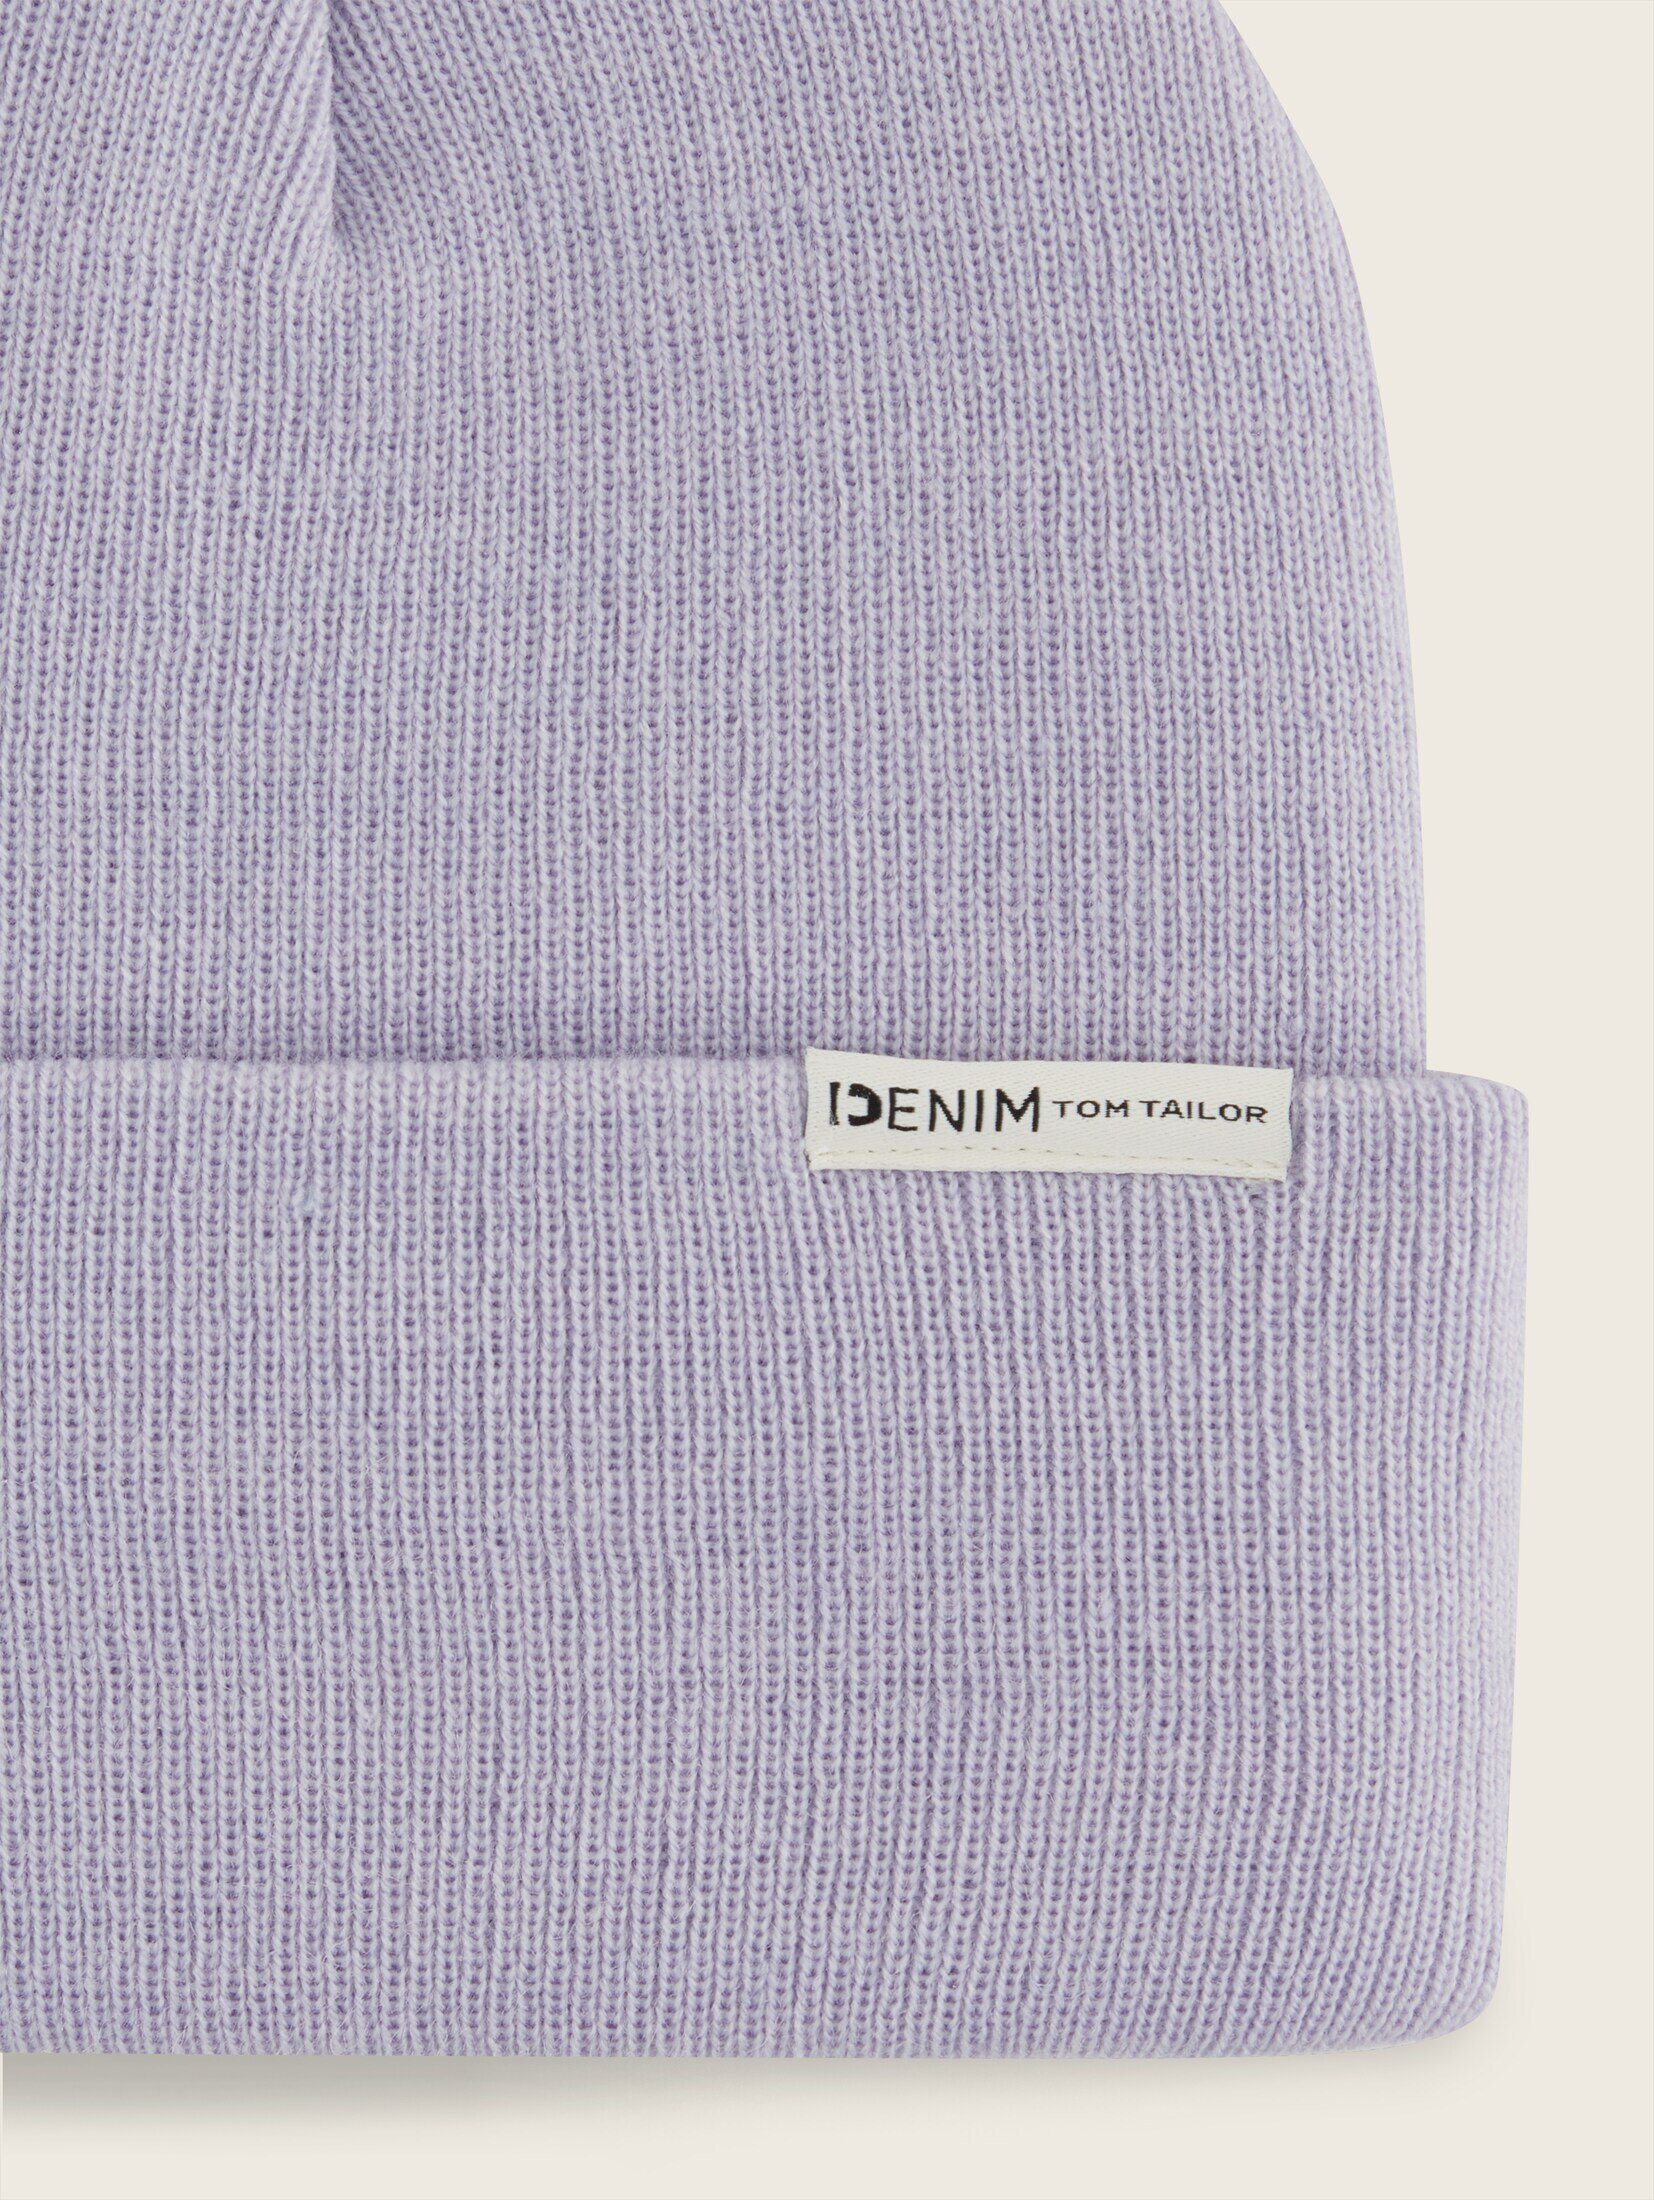 TAILOR Polyester TOM Denim lavender Strickmütze Beanie (1-St) mit recyceltem soft